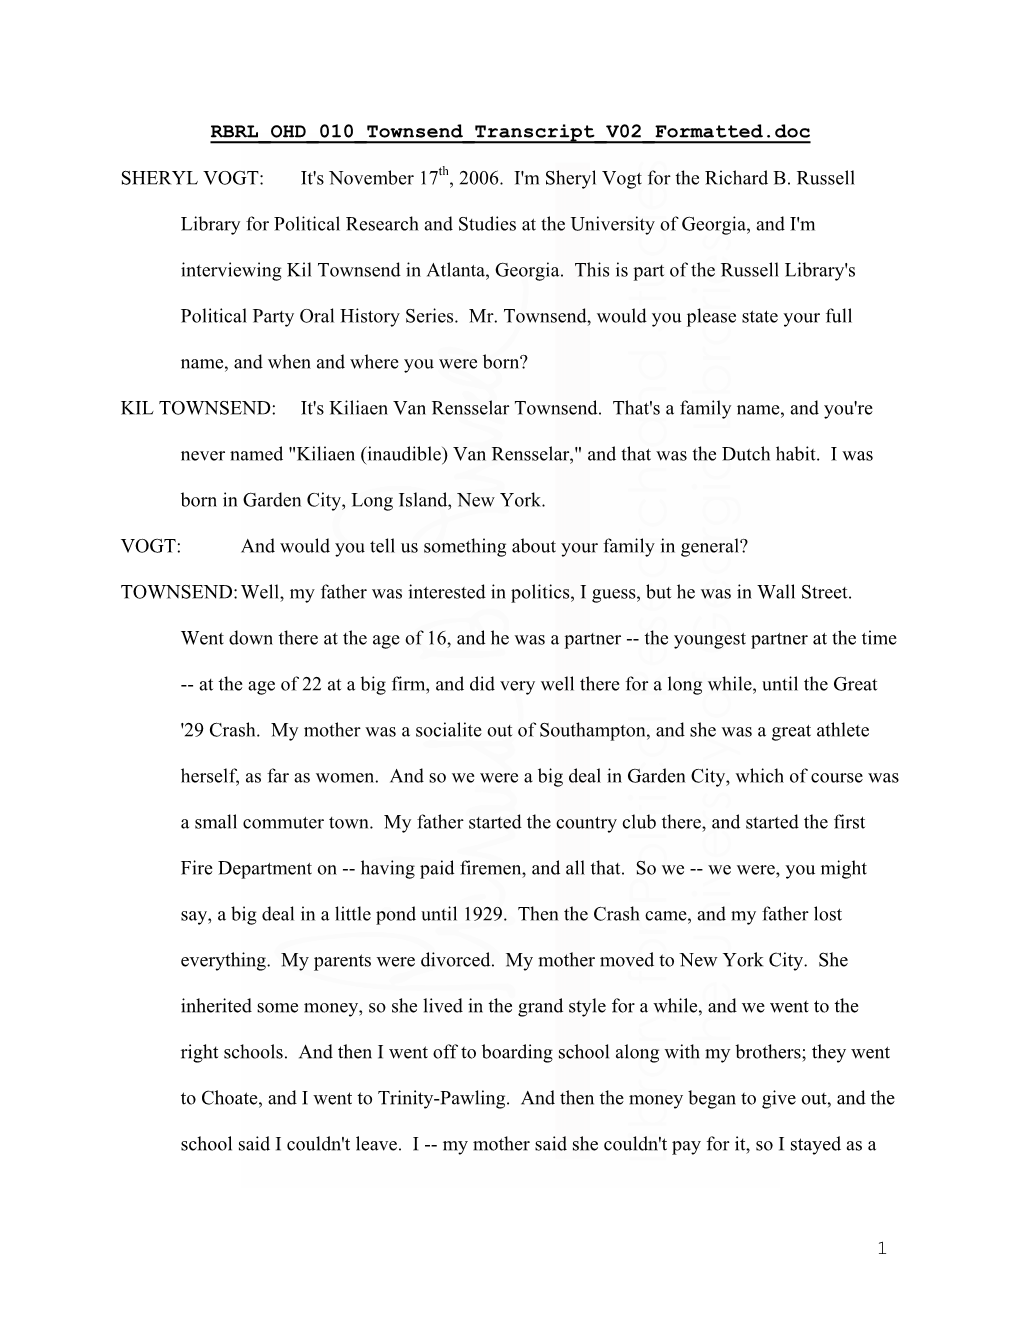 Townsend Transcript V02 Formatted.Doc SHERYL VOGT: It's November 17Th, 2006